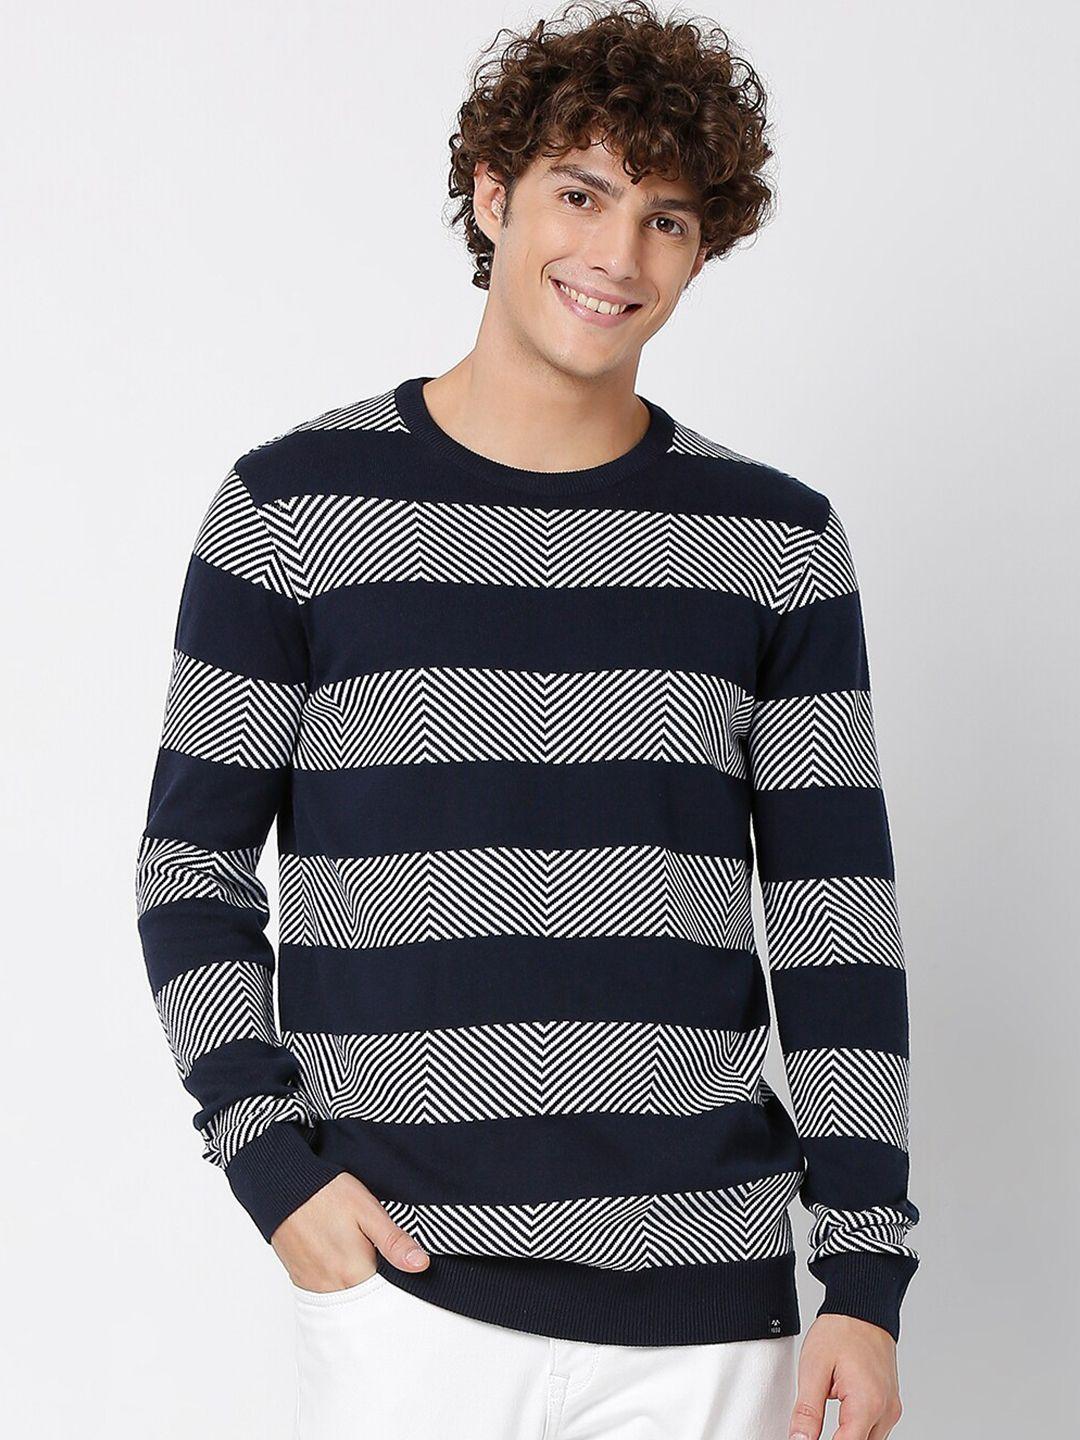 mufti-men-navy-blue-&-white-striped-pullover-sweater